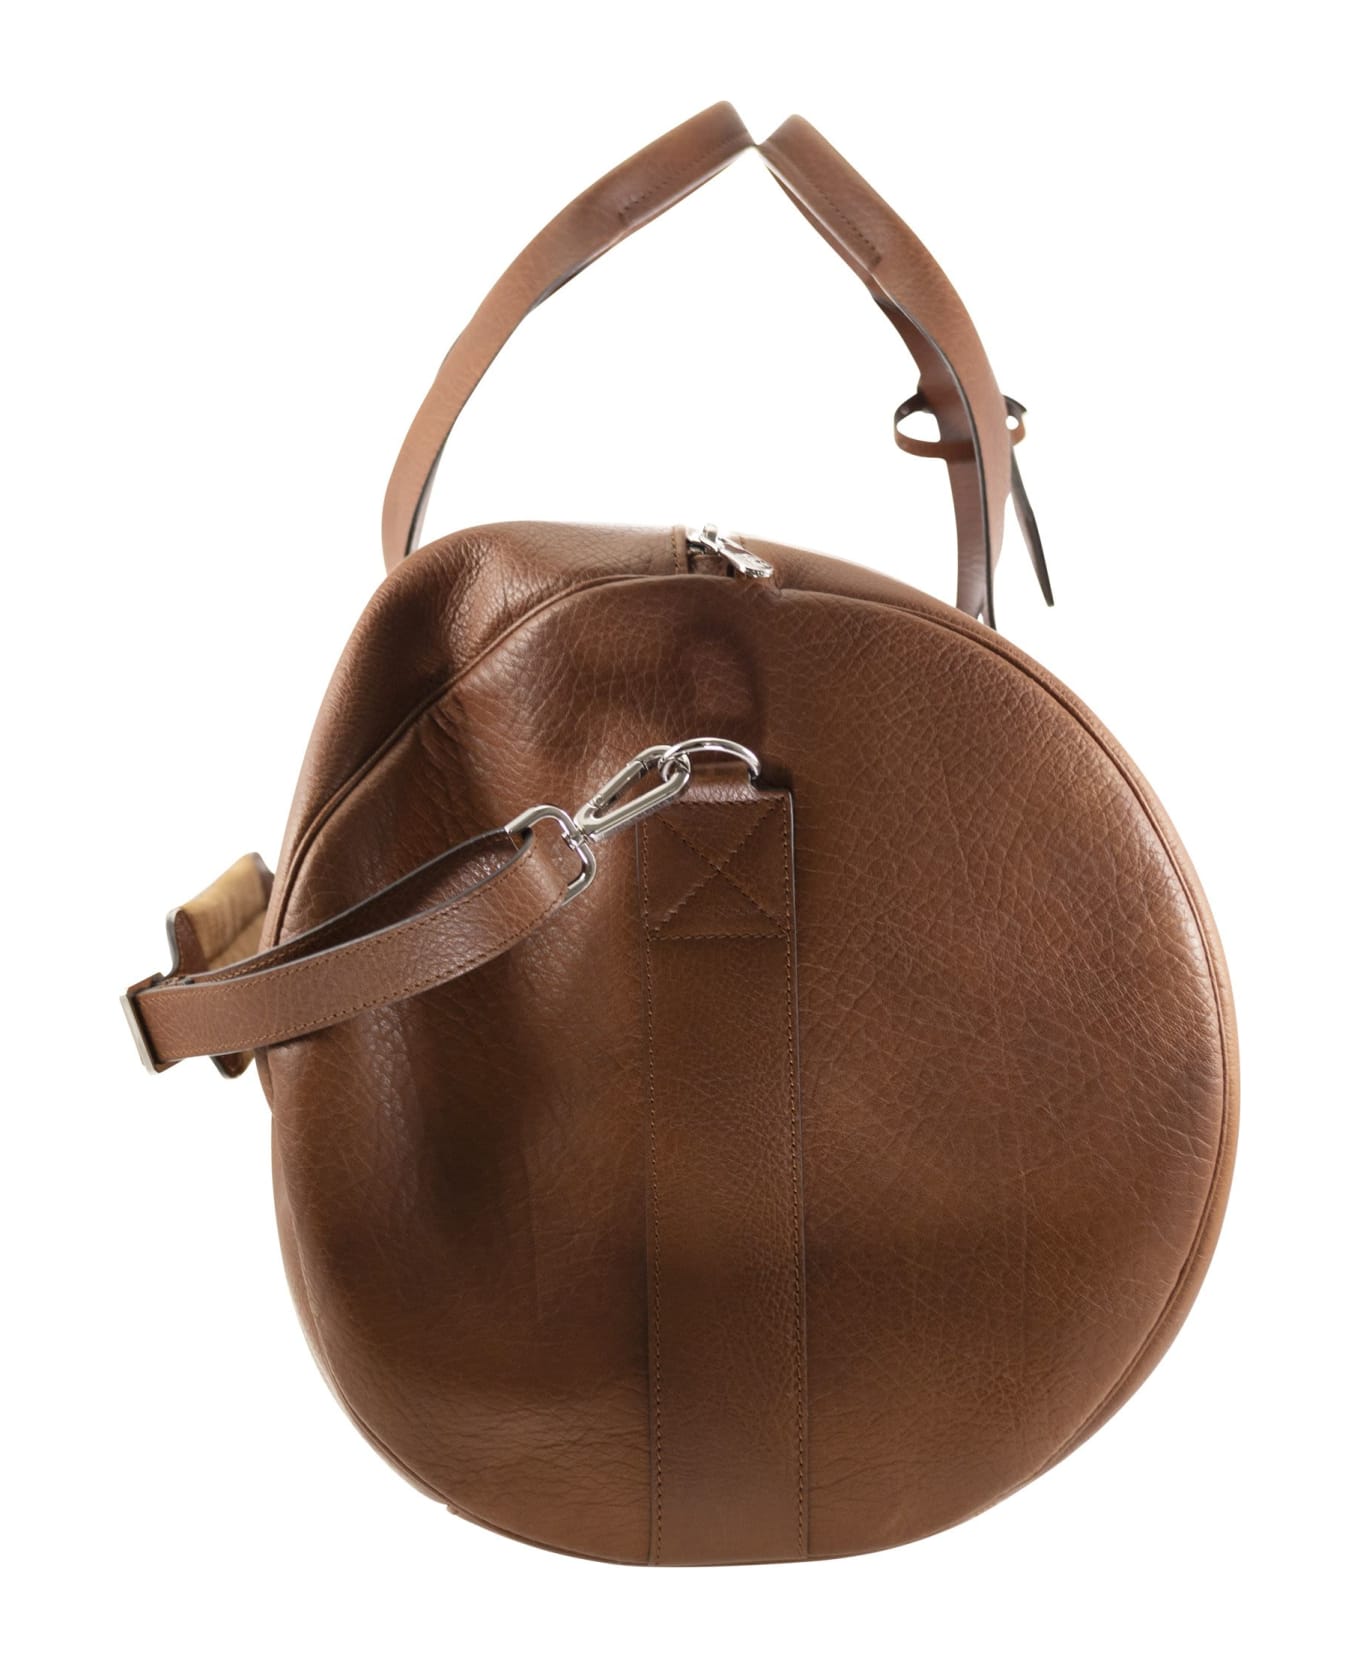 Brunello Cucinelli Leather Active Bag - Cognac